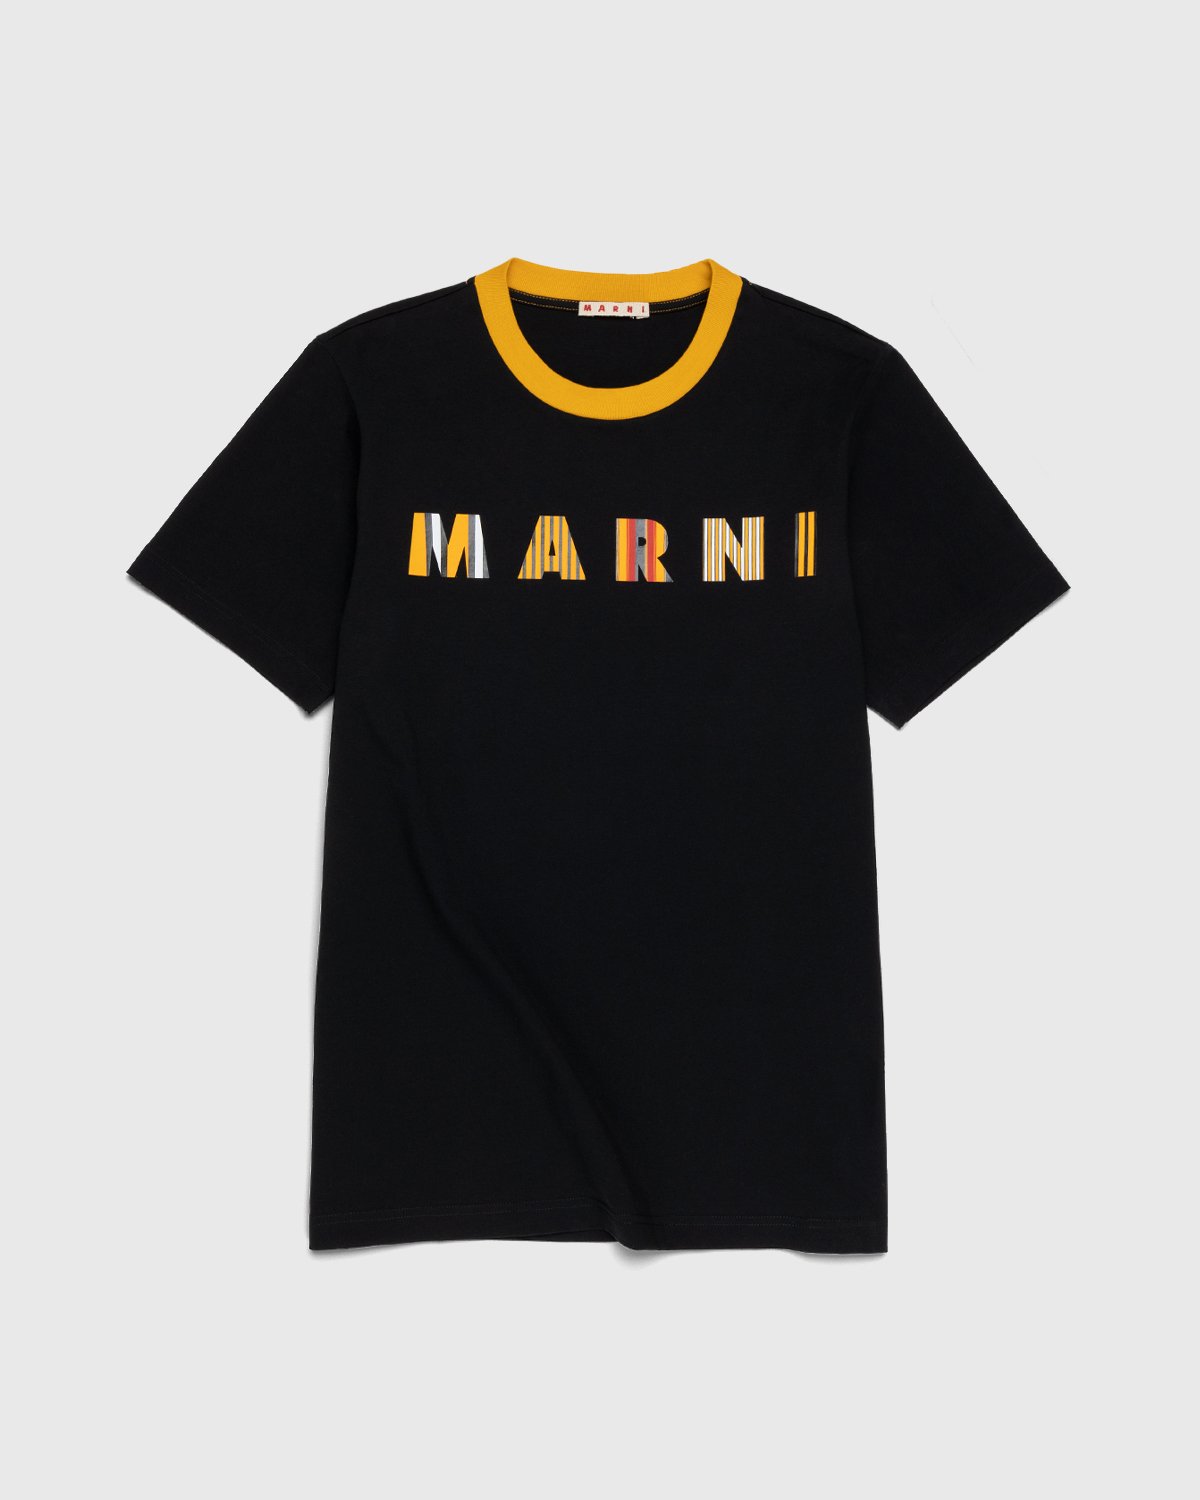 Marni - Stripe Logo Bio Jersey T-Shirt Black/Gold - Clothing - Yellow - Image 1